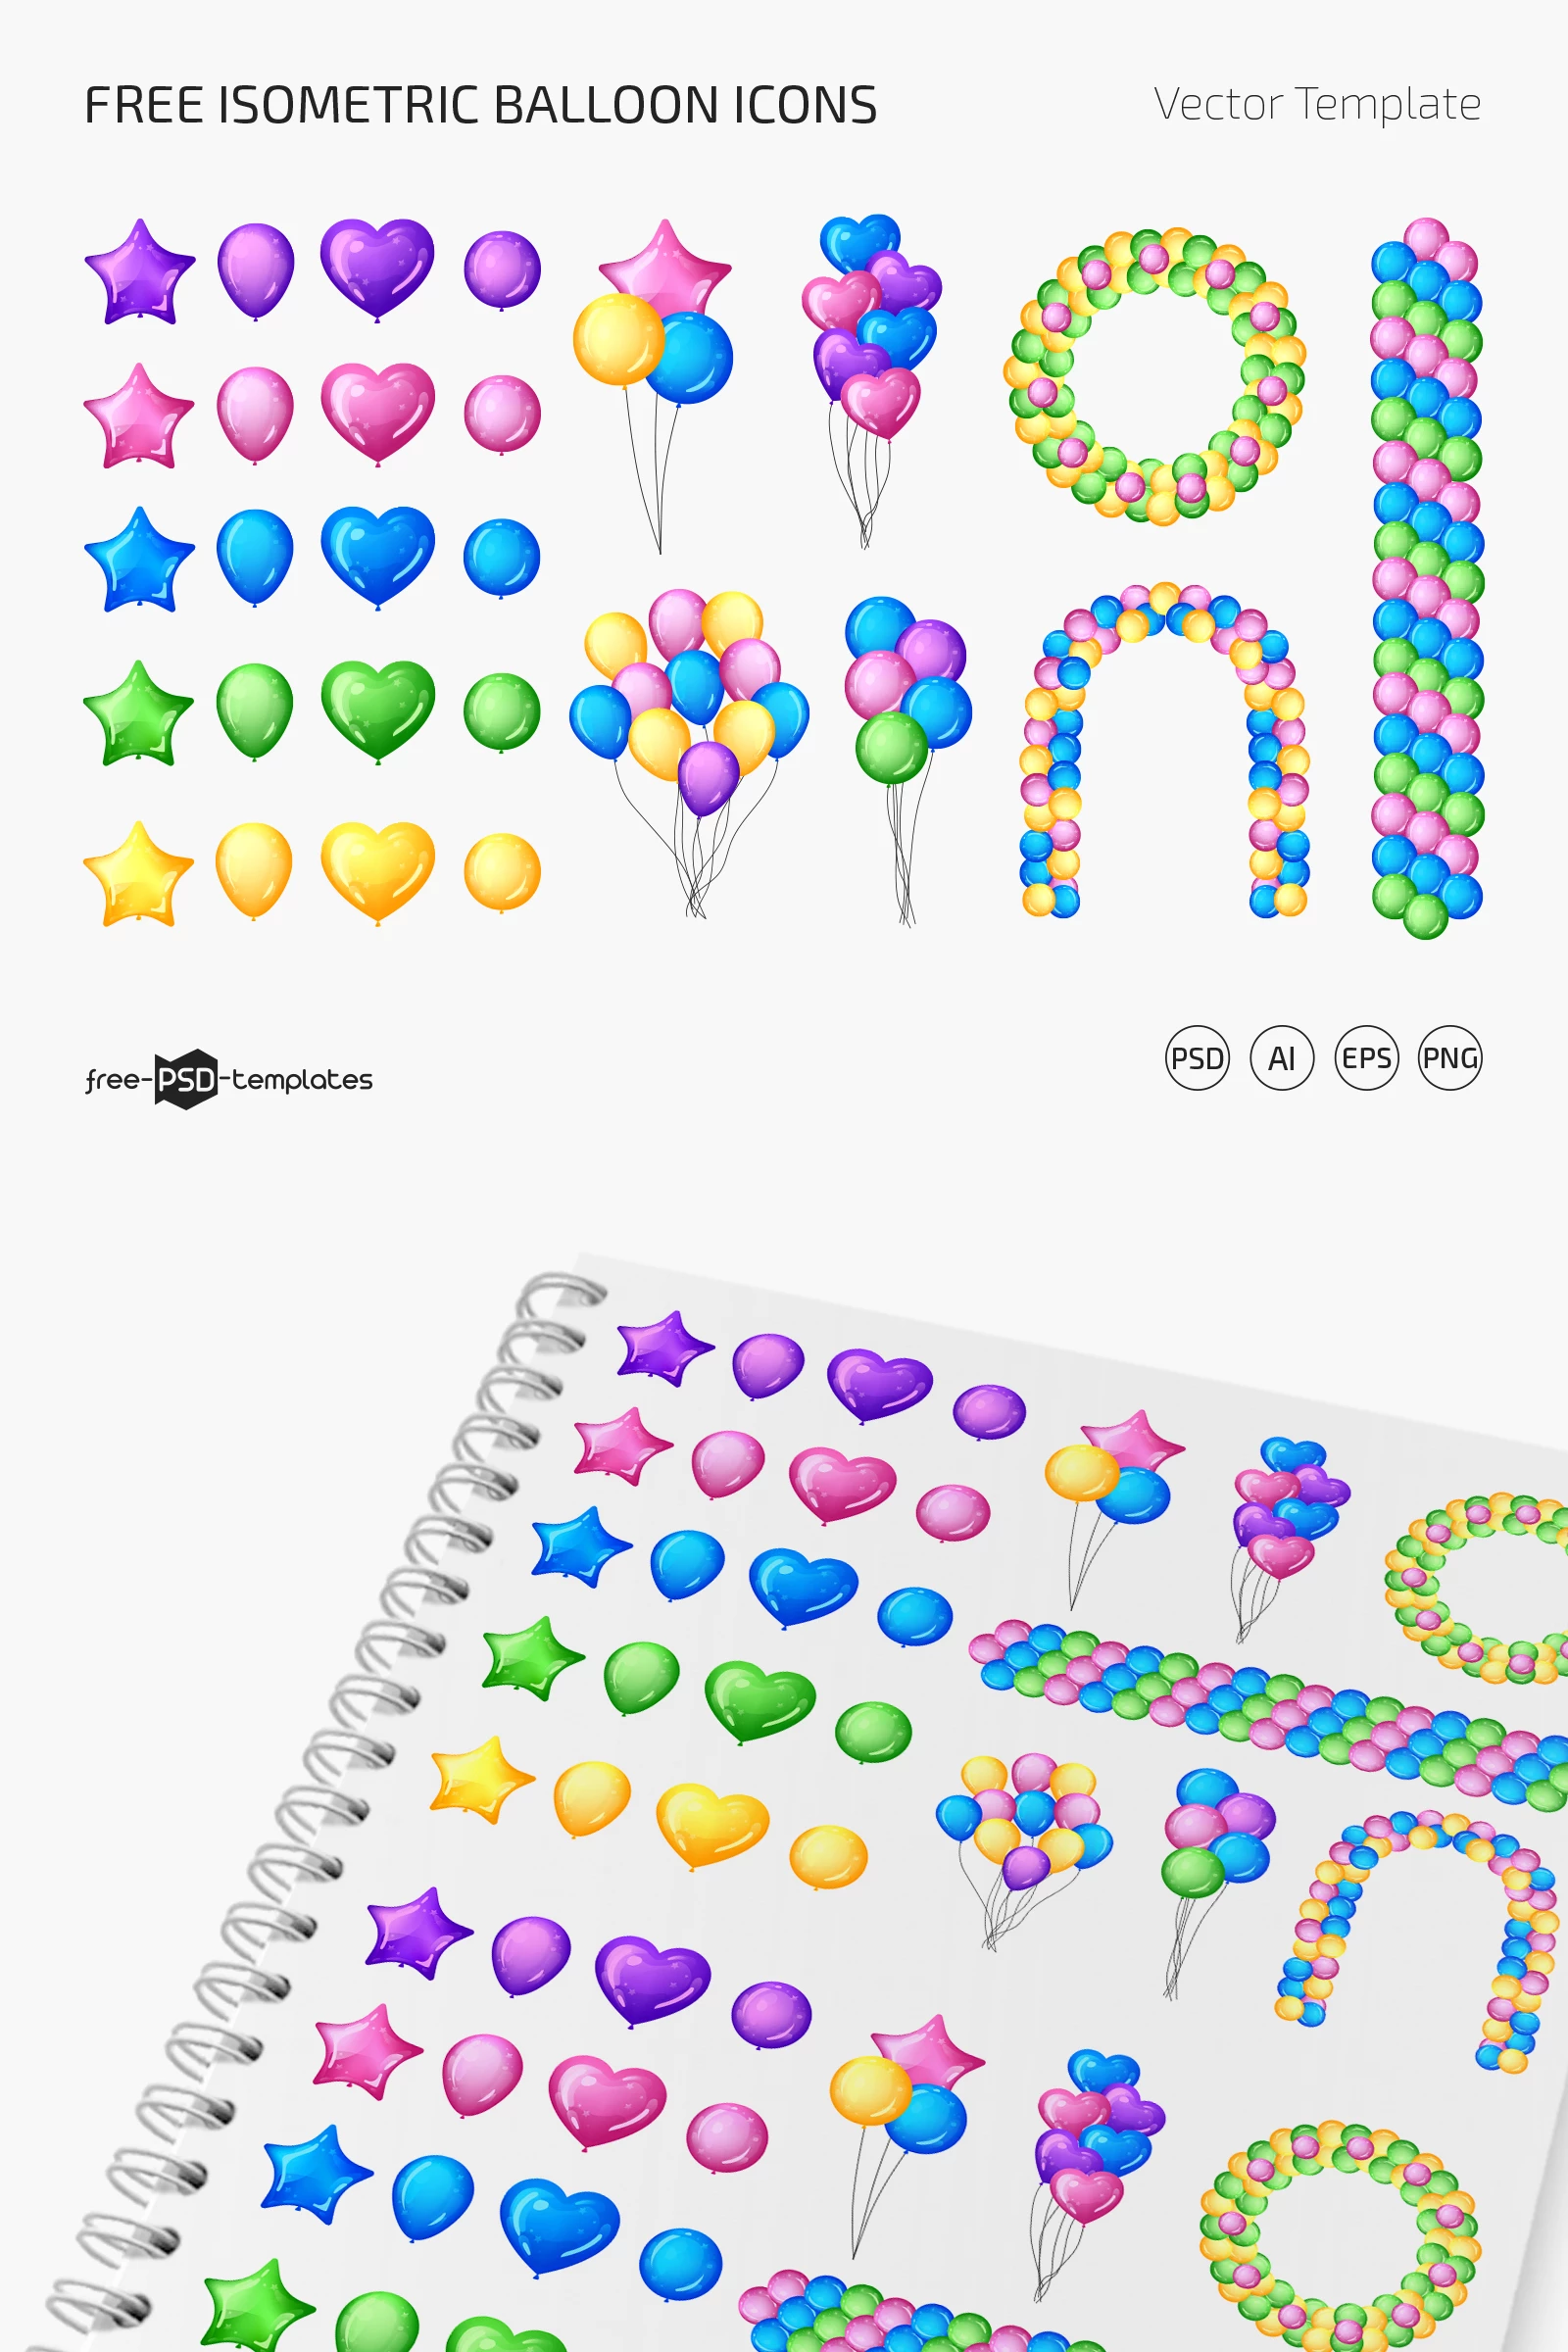 Free Isometric Balloon Icons